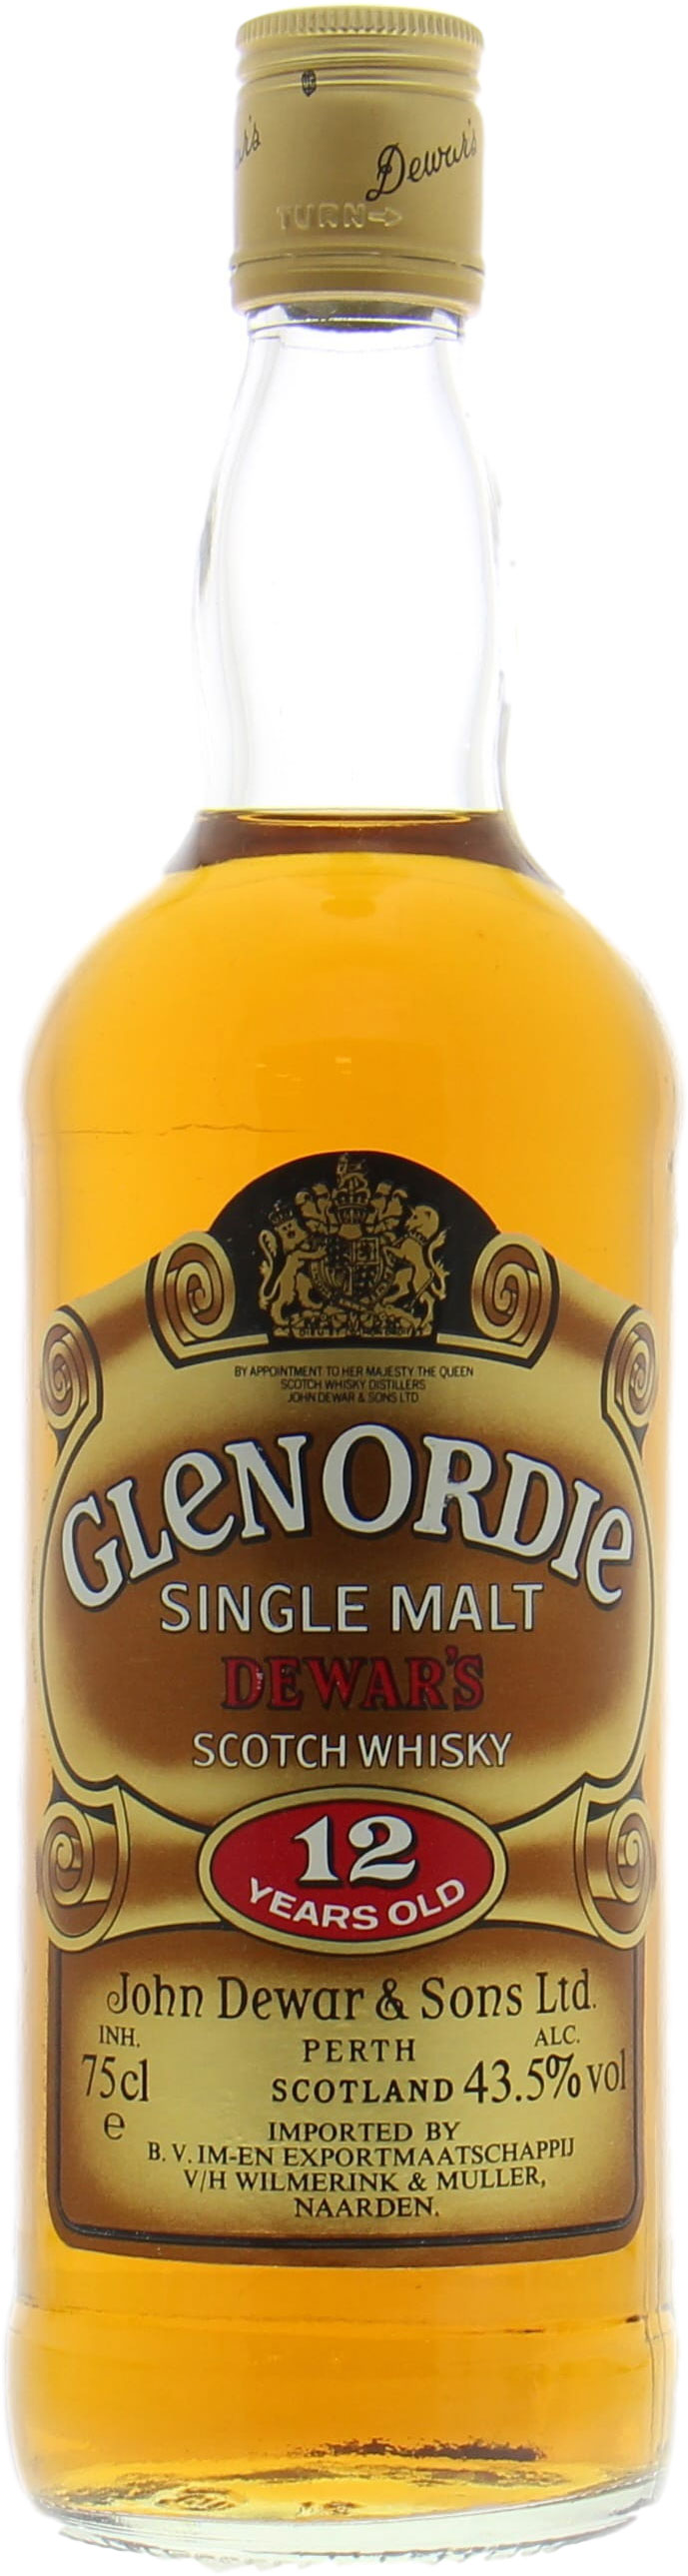 Glen Ord - 12 Years Old Glenordie 43.5% NV In Original Container